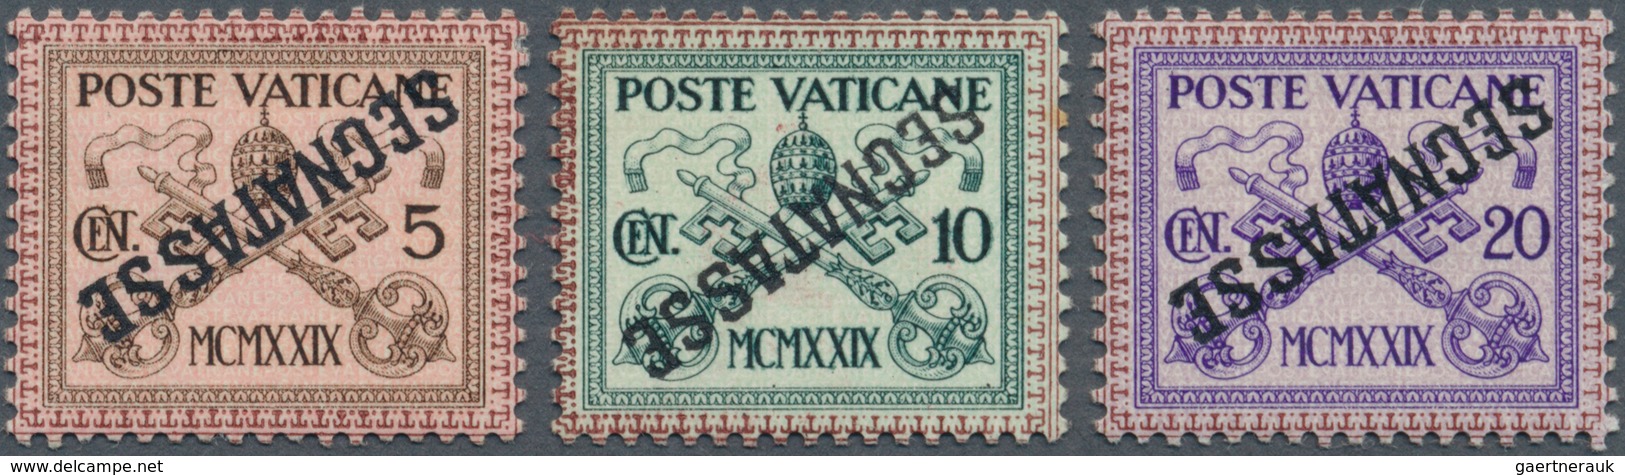 Vatikan - Portomarken: 1931, Postage Dues 5, 10 And 20 C. Test Prints With Different Coloured Underp - Segnatasse